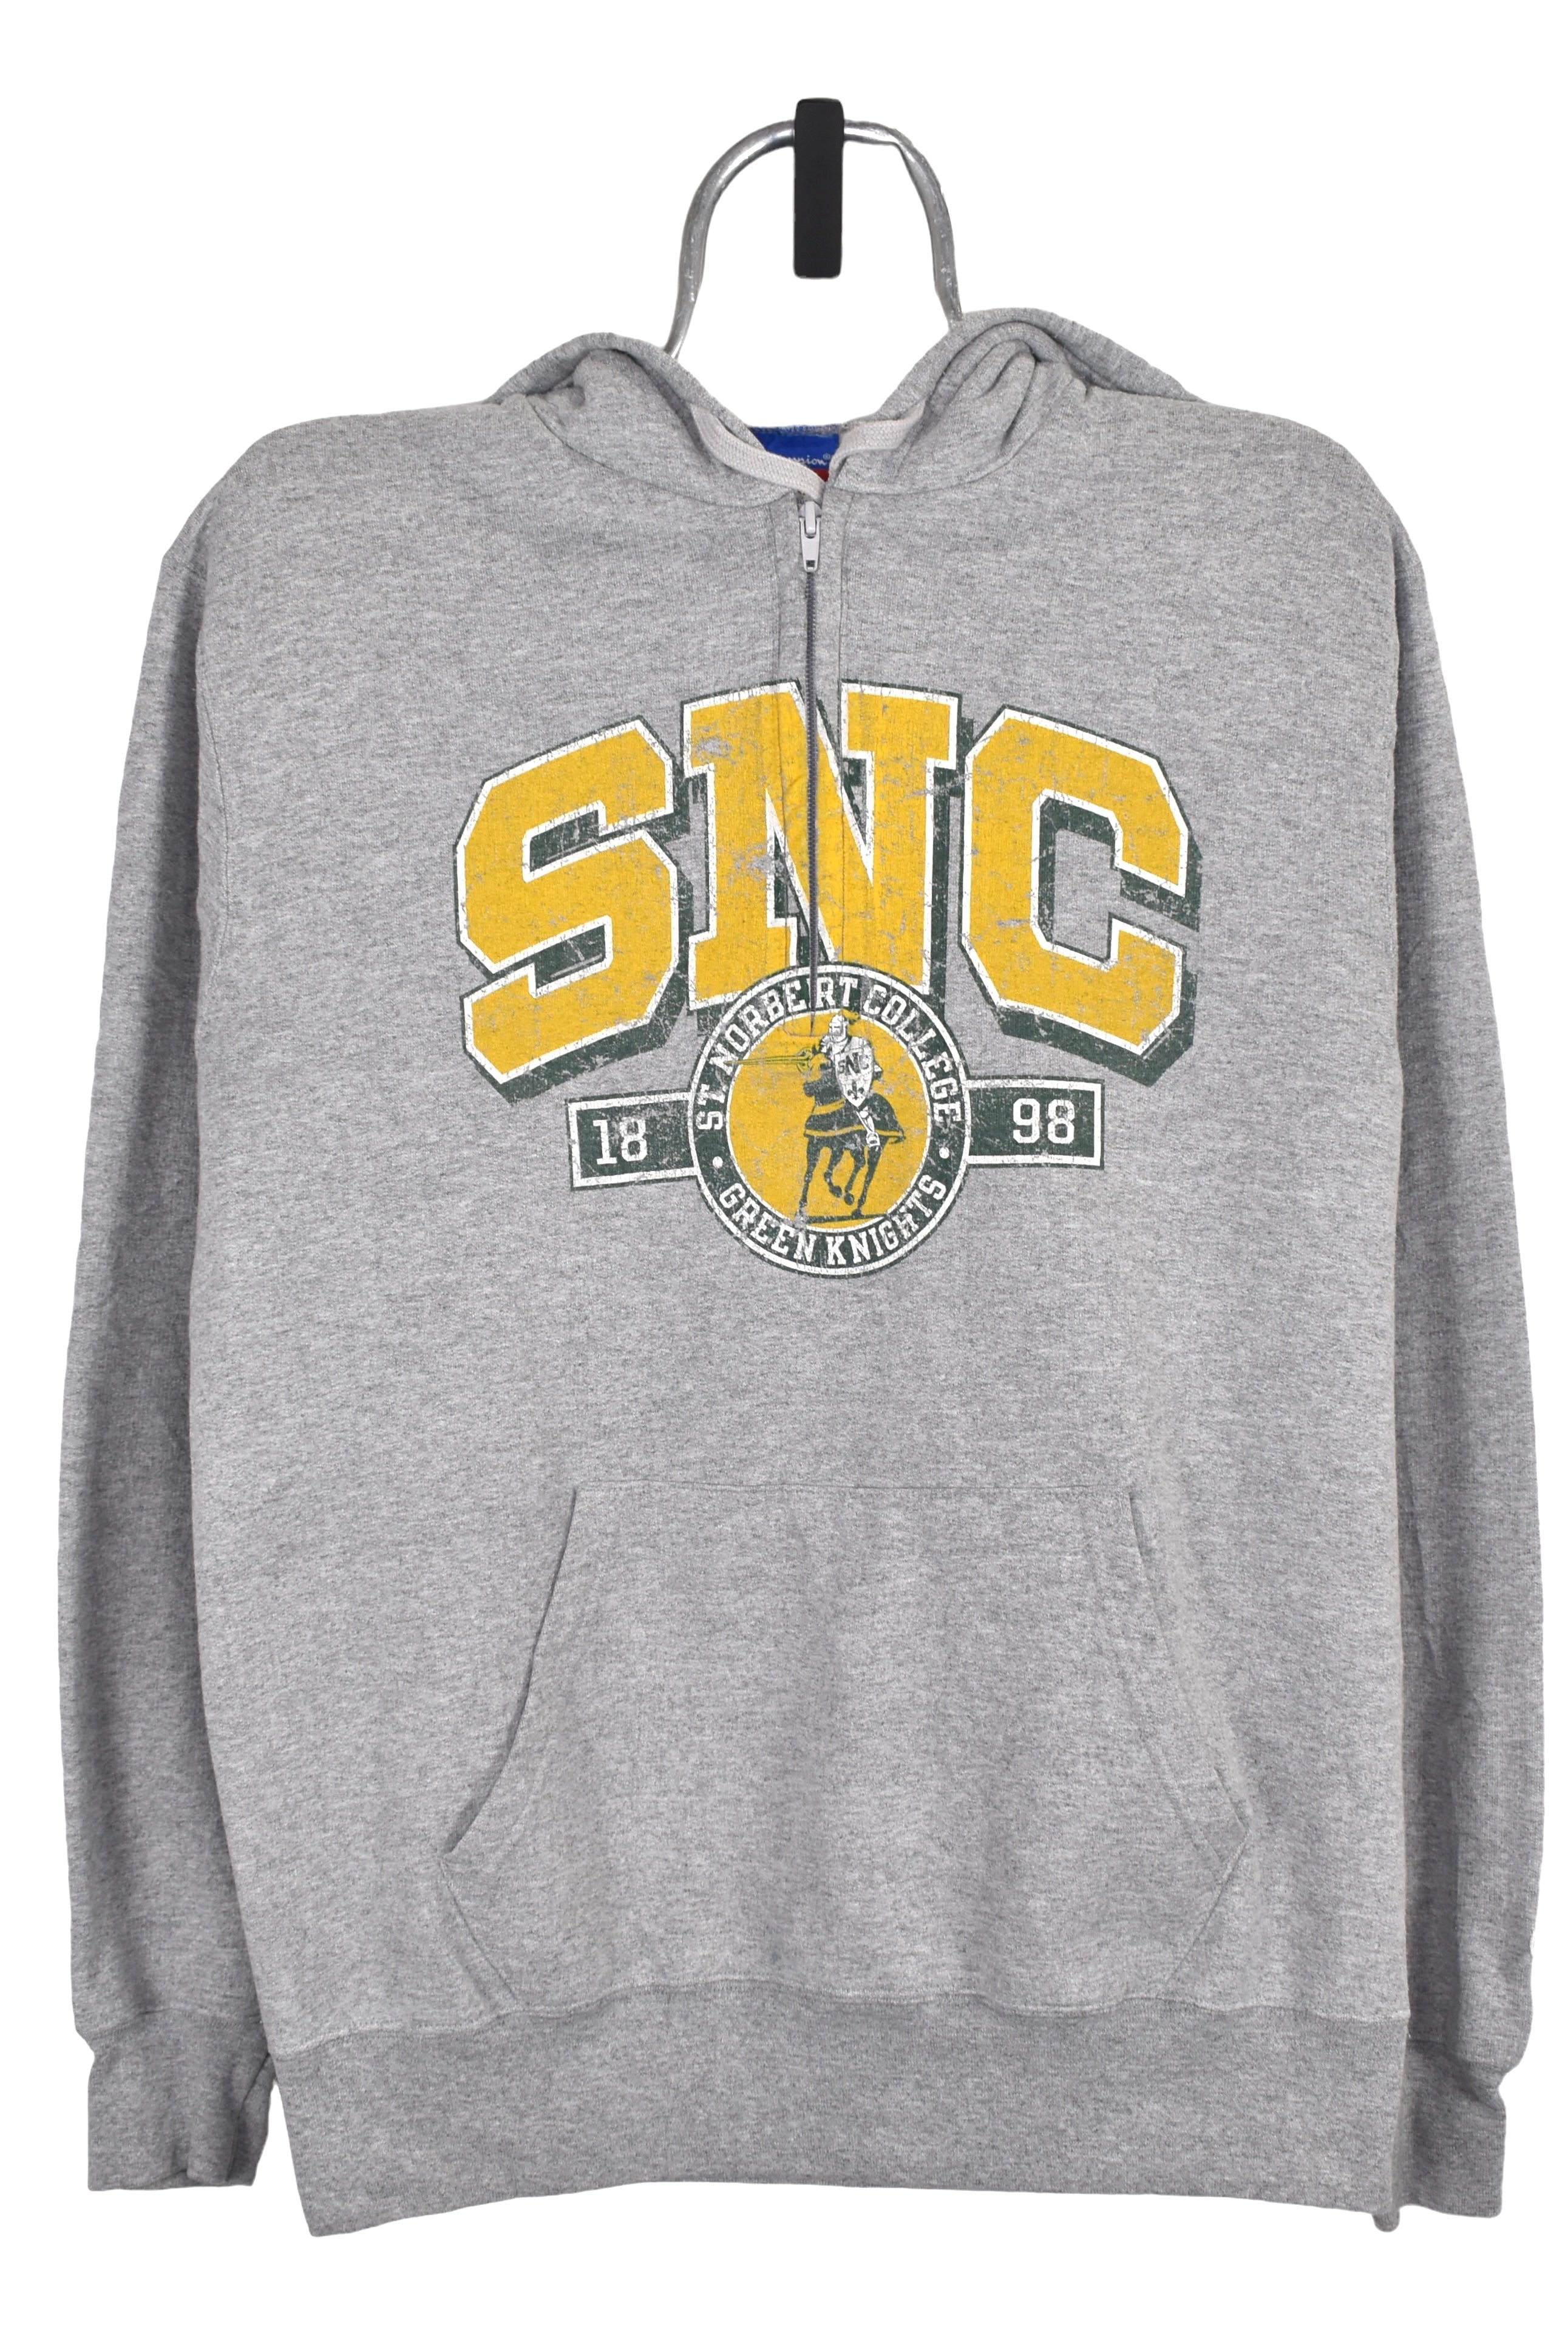 Vintage St. Norbert College hoodie (M), grey graphic sweatshirt